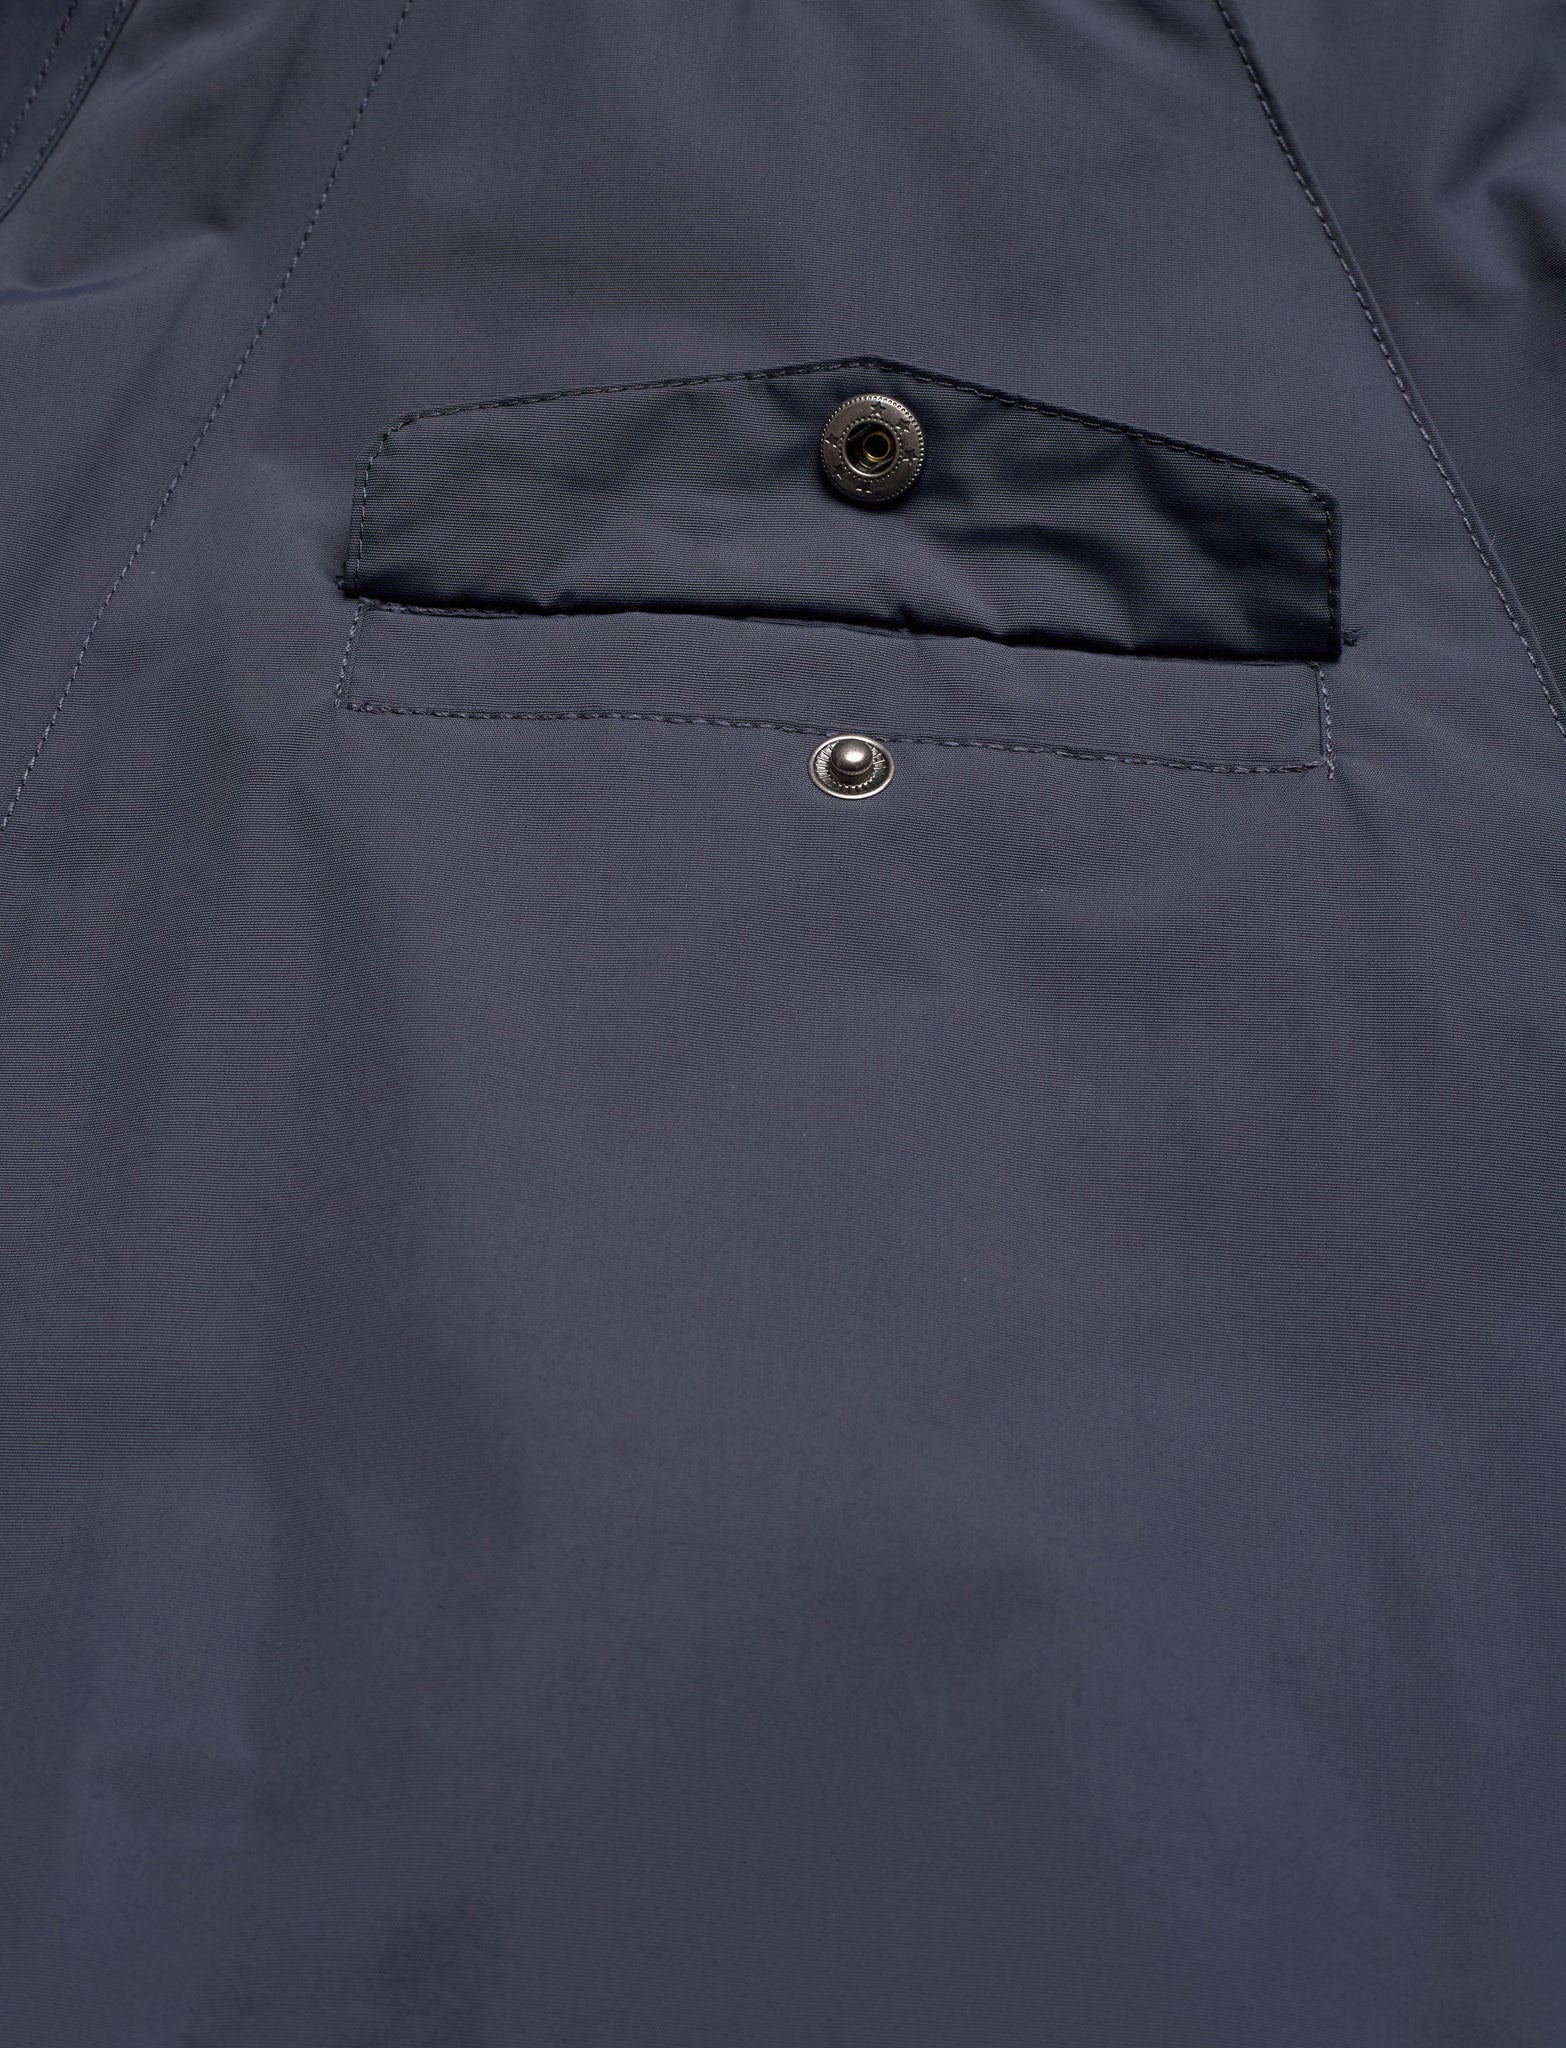 Mini a Ture - MATWAI fleece lined spring jacket. GRS ombre blue